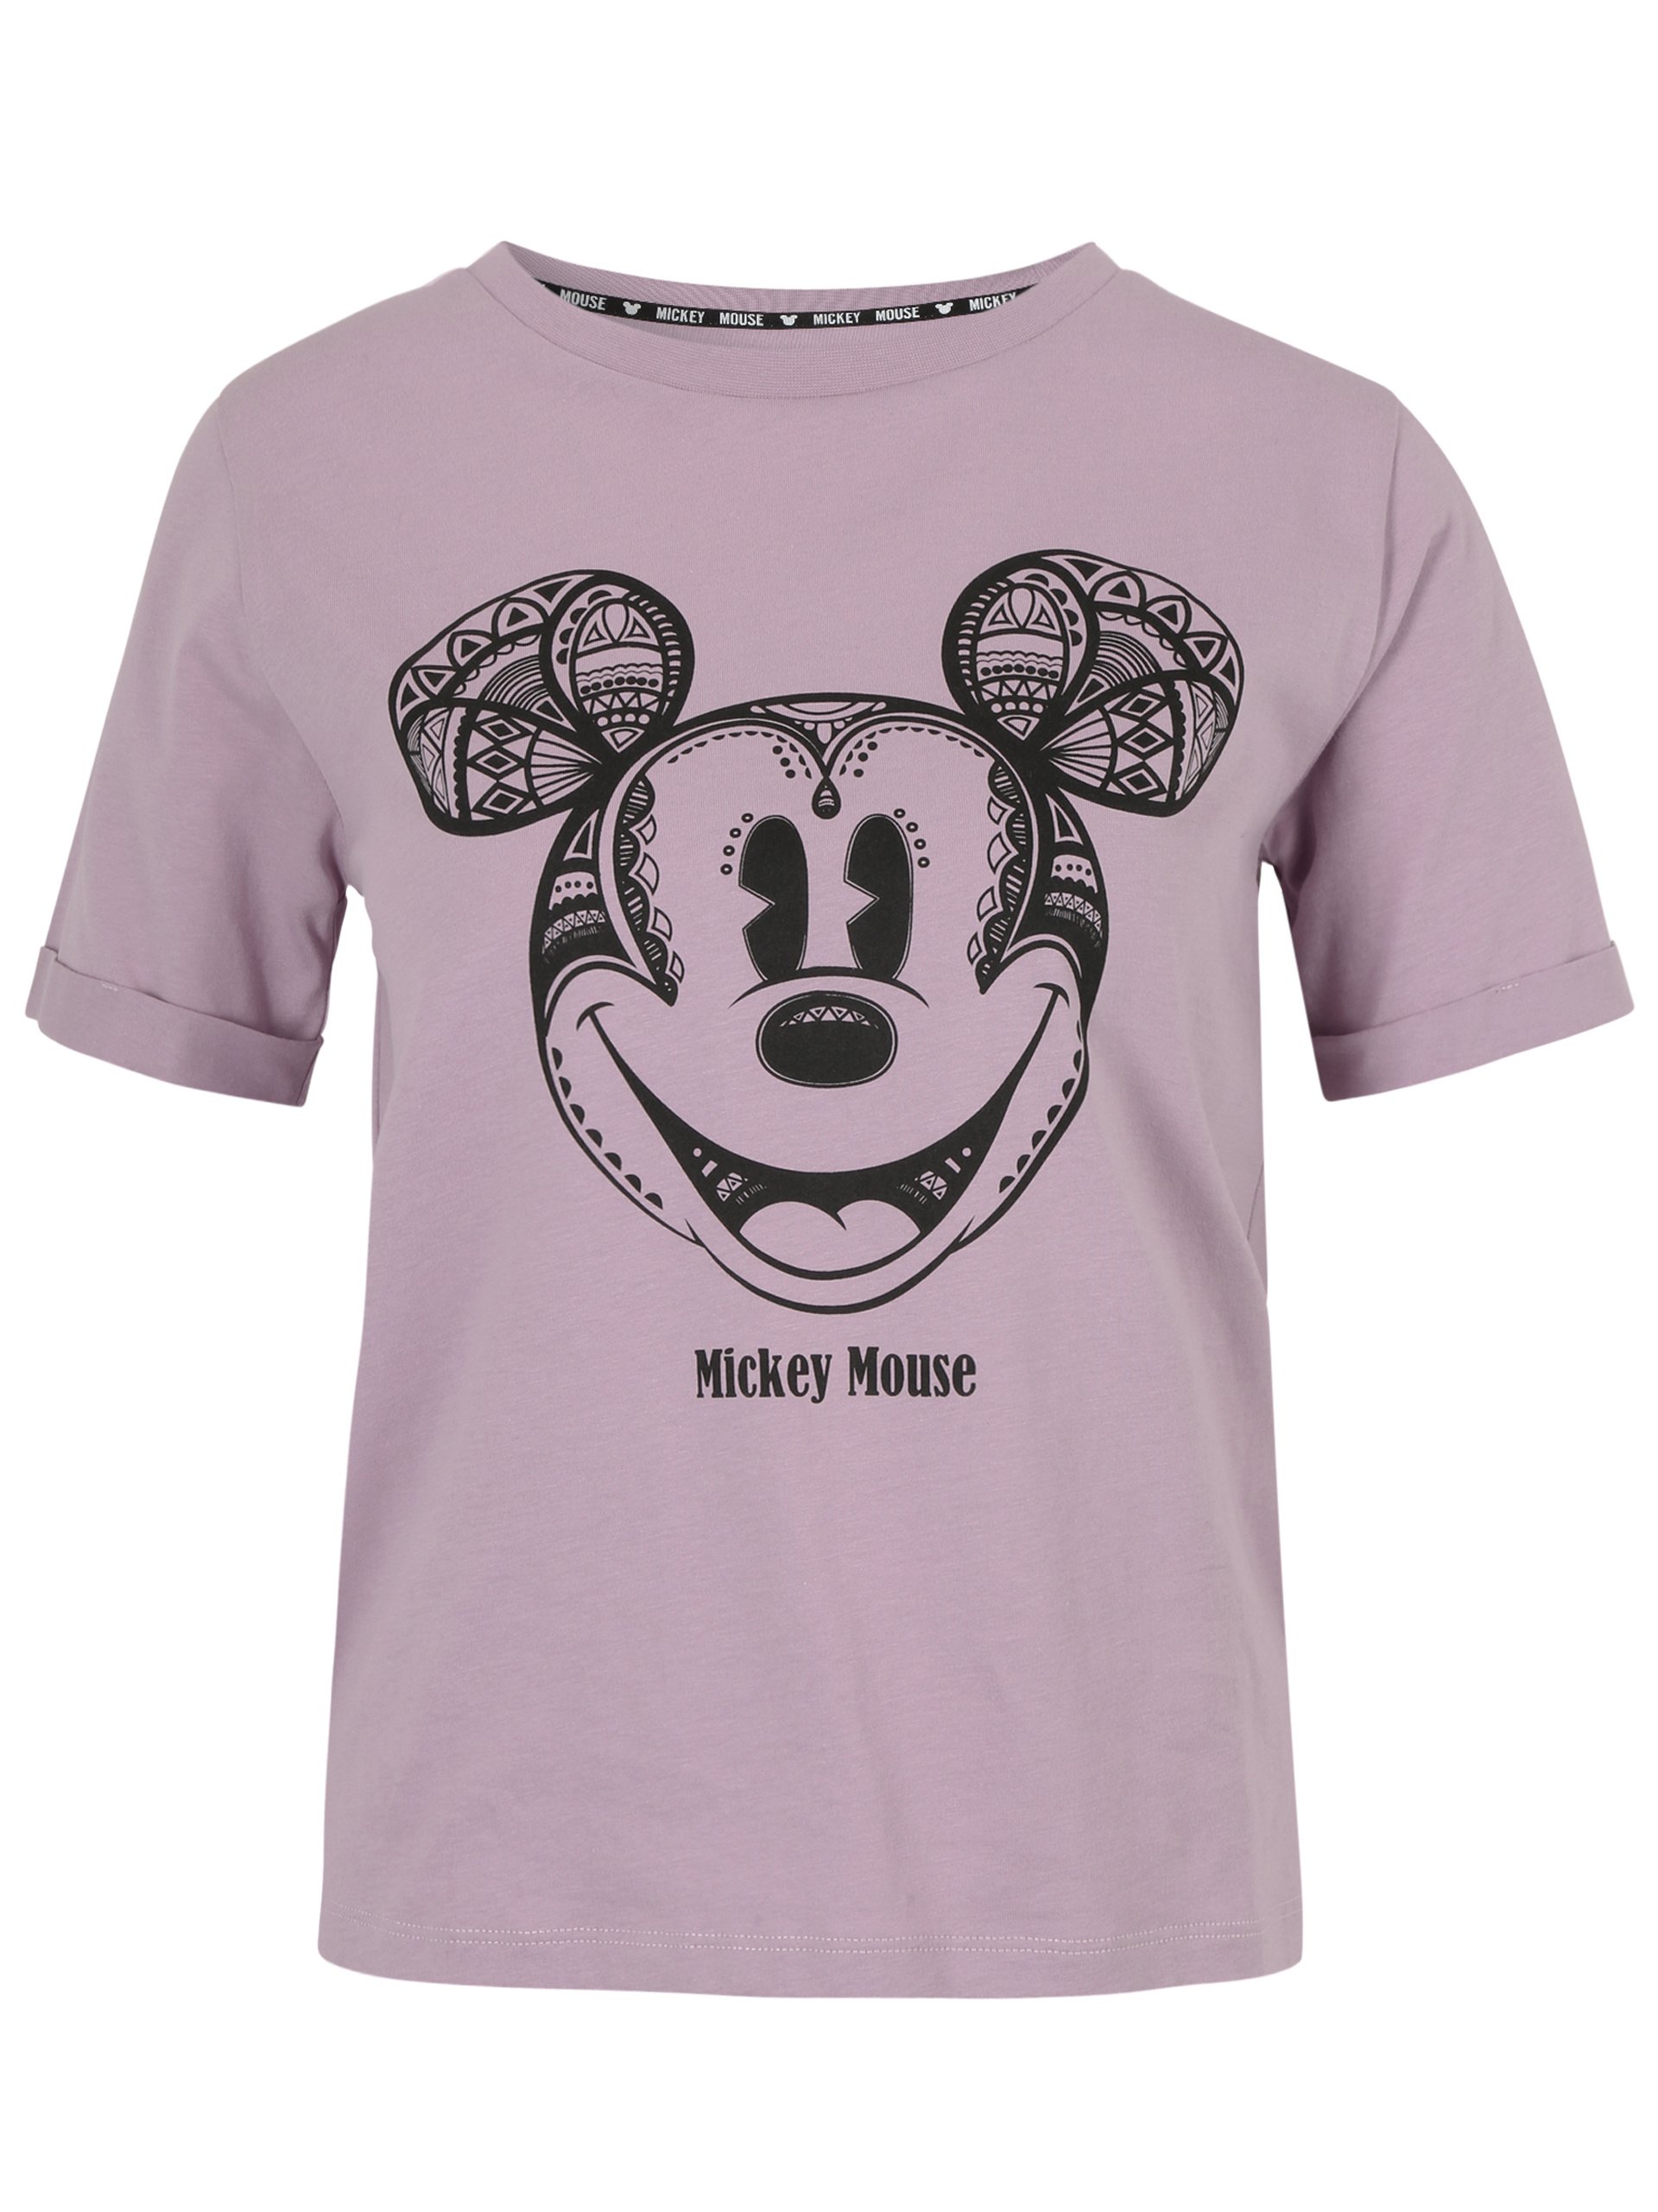 Course Damen T-Shirt - Mickey Mouse online kaufen